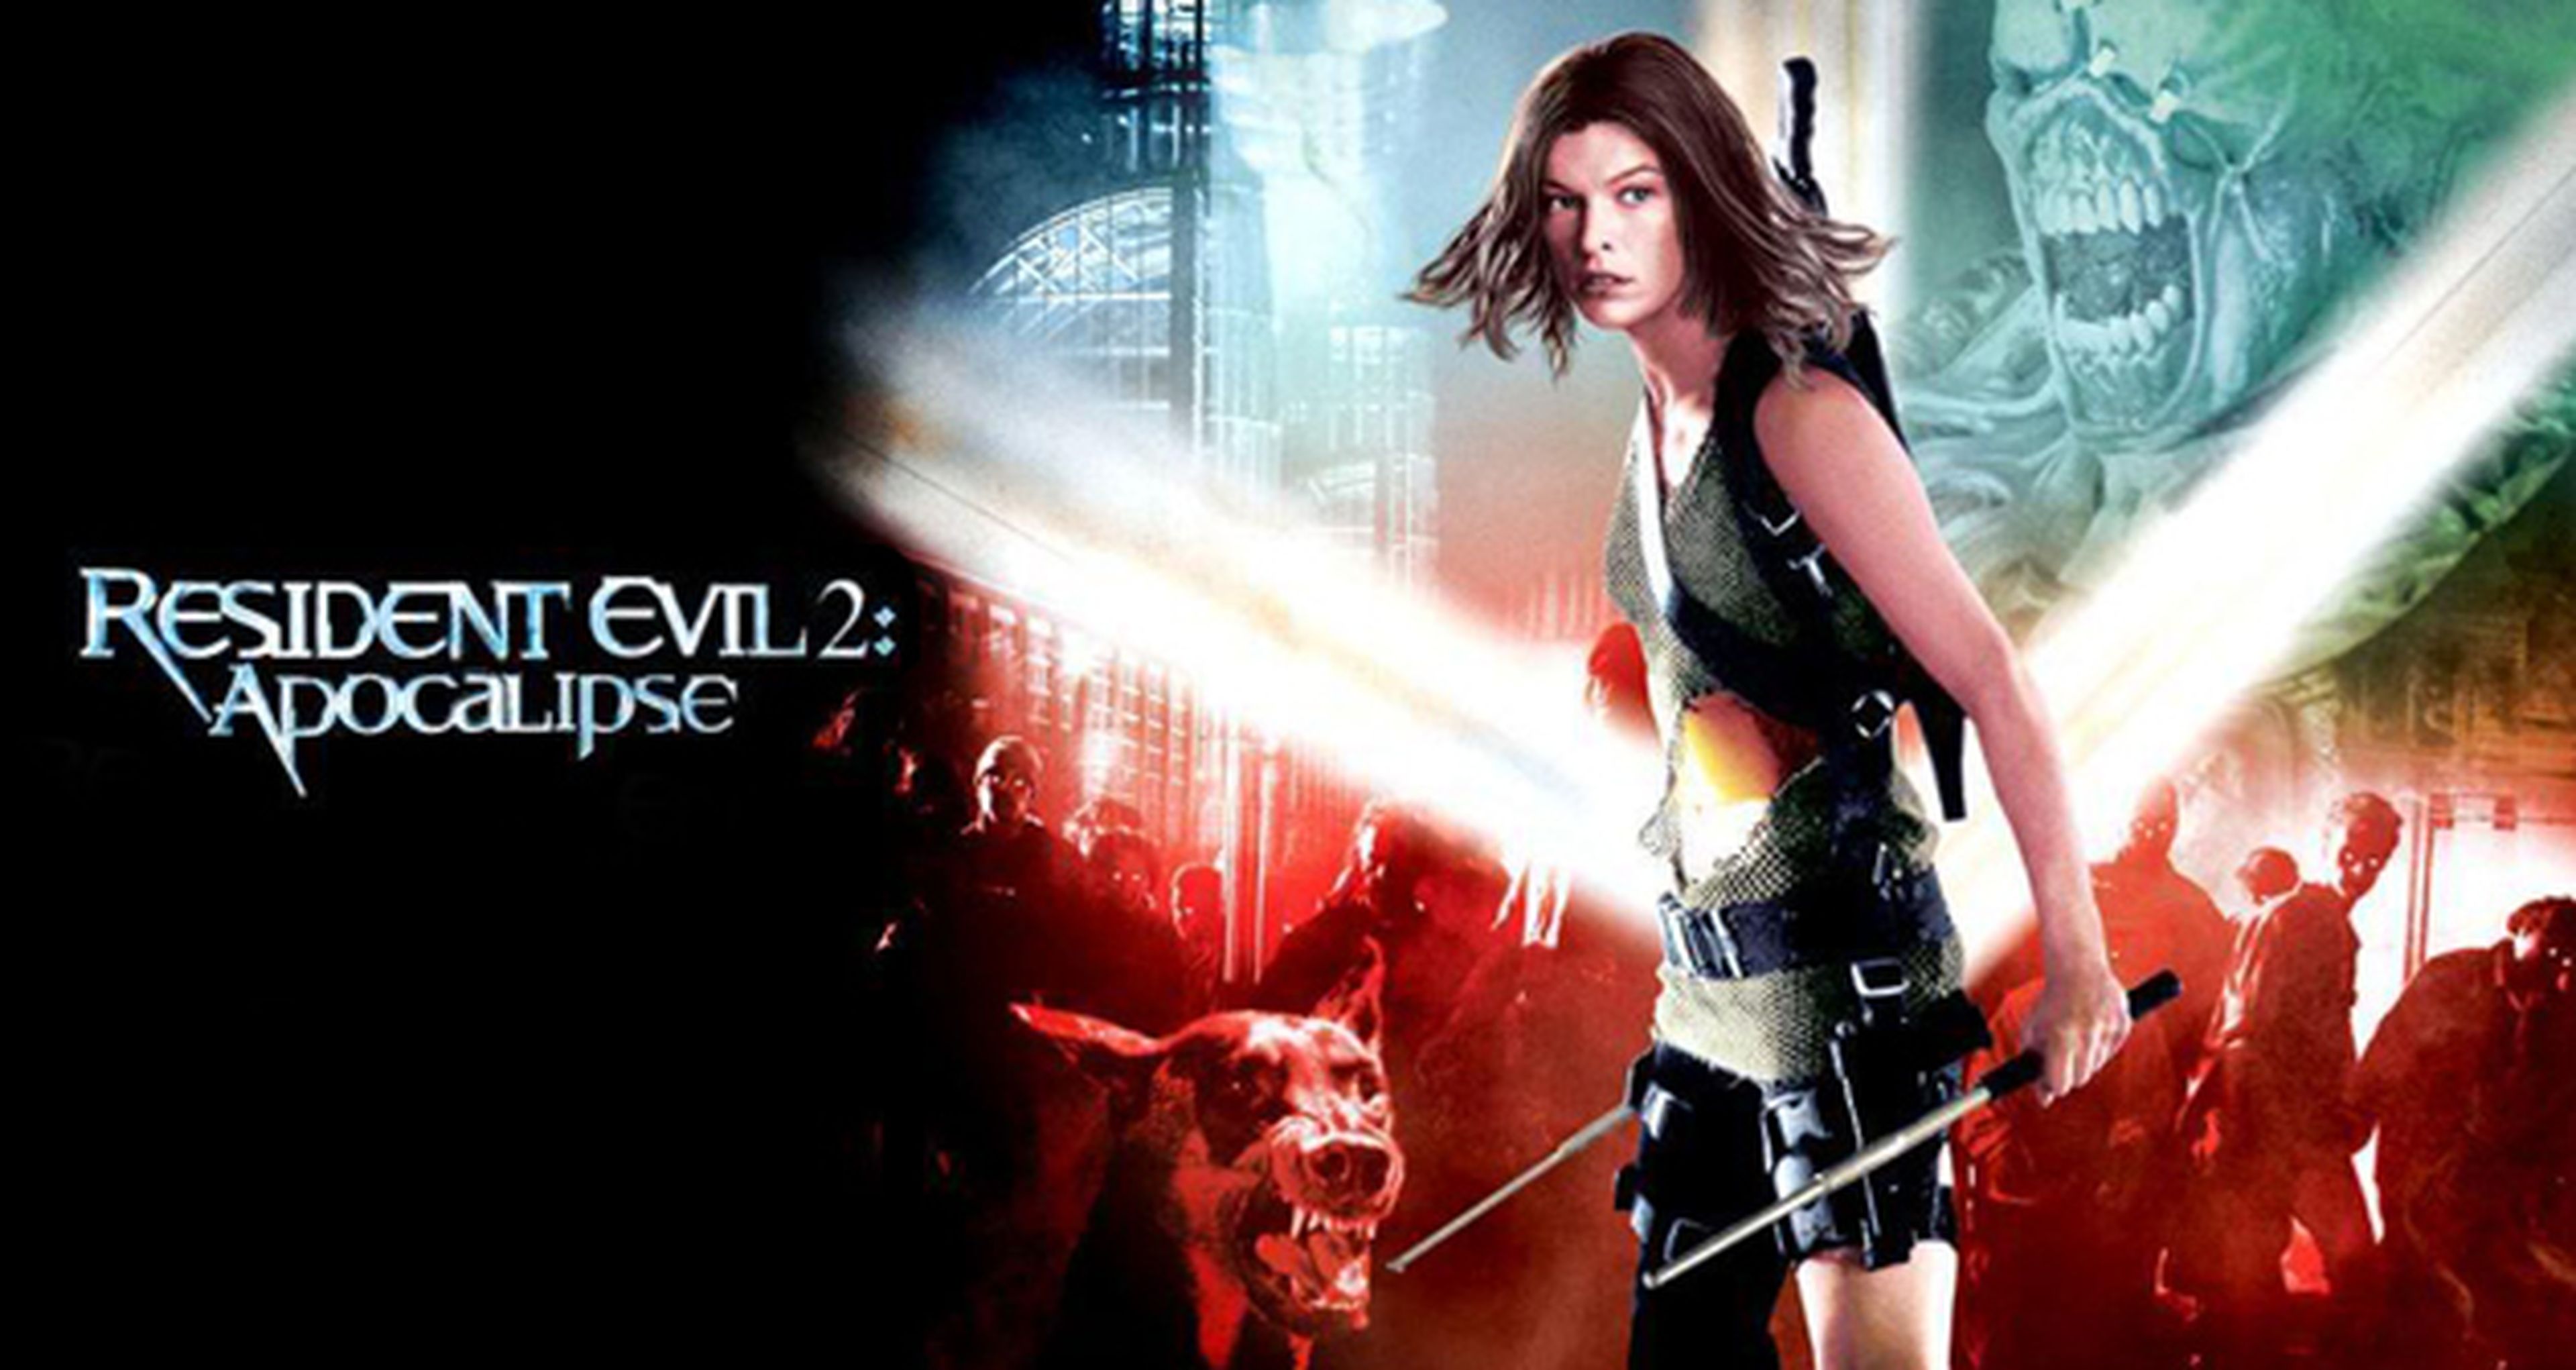 Del juego al cine: Resident Evil Apocalipsis